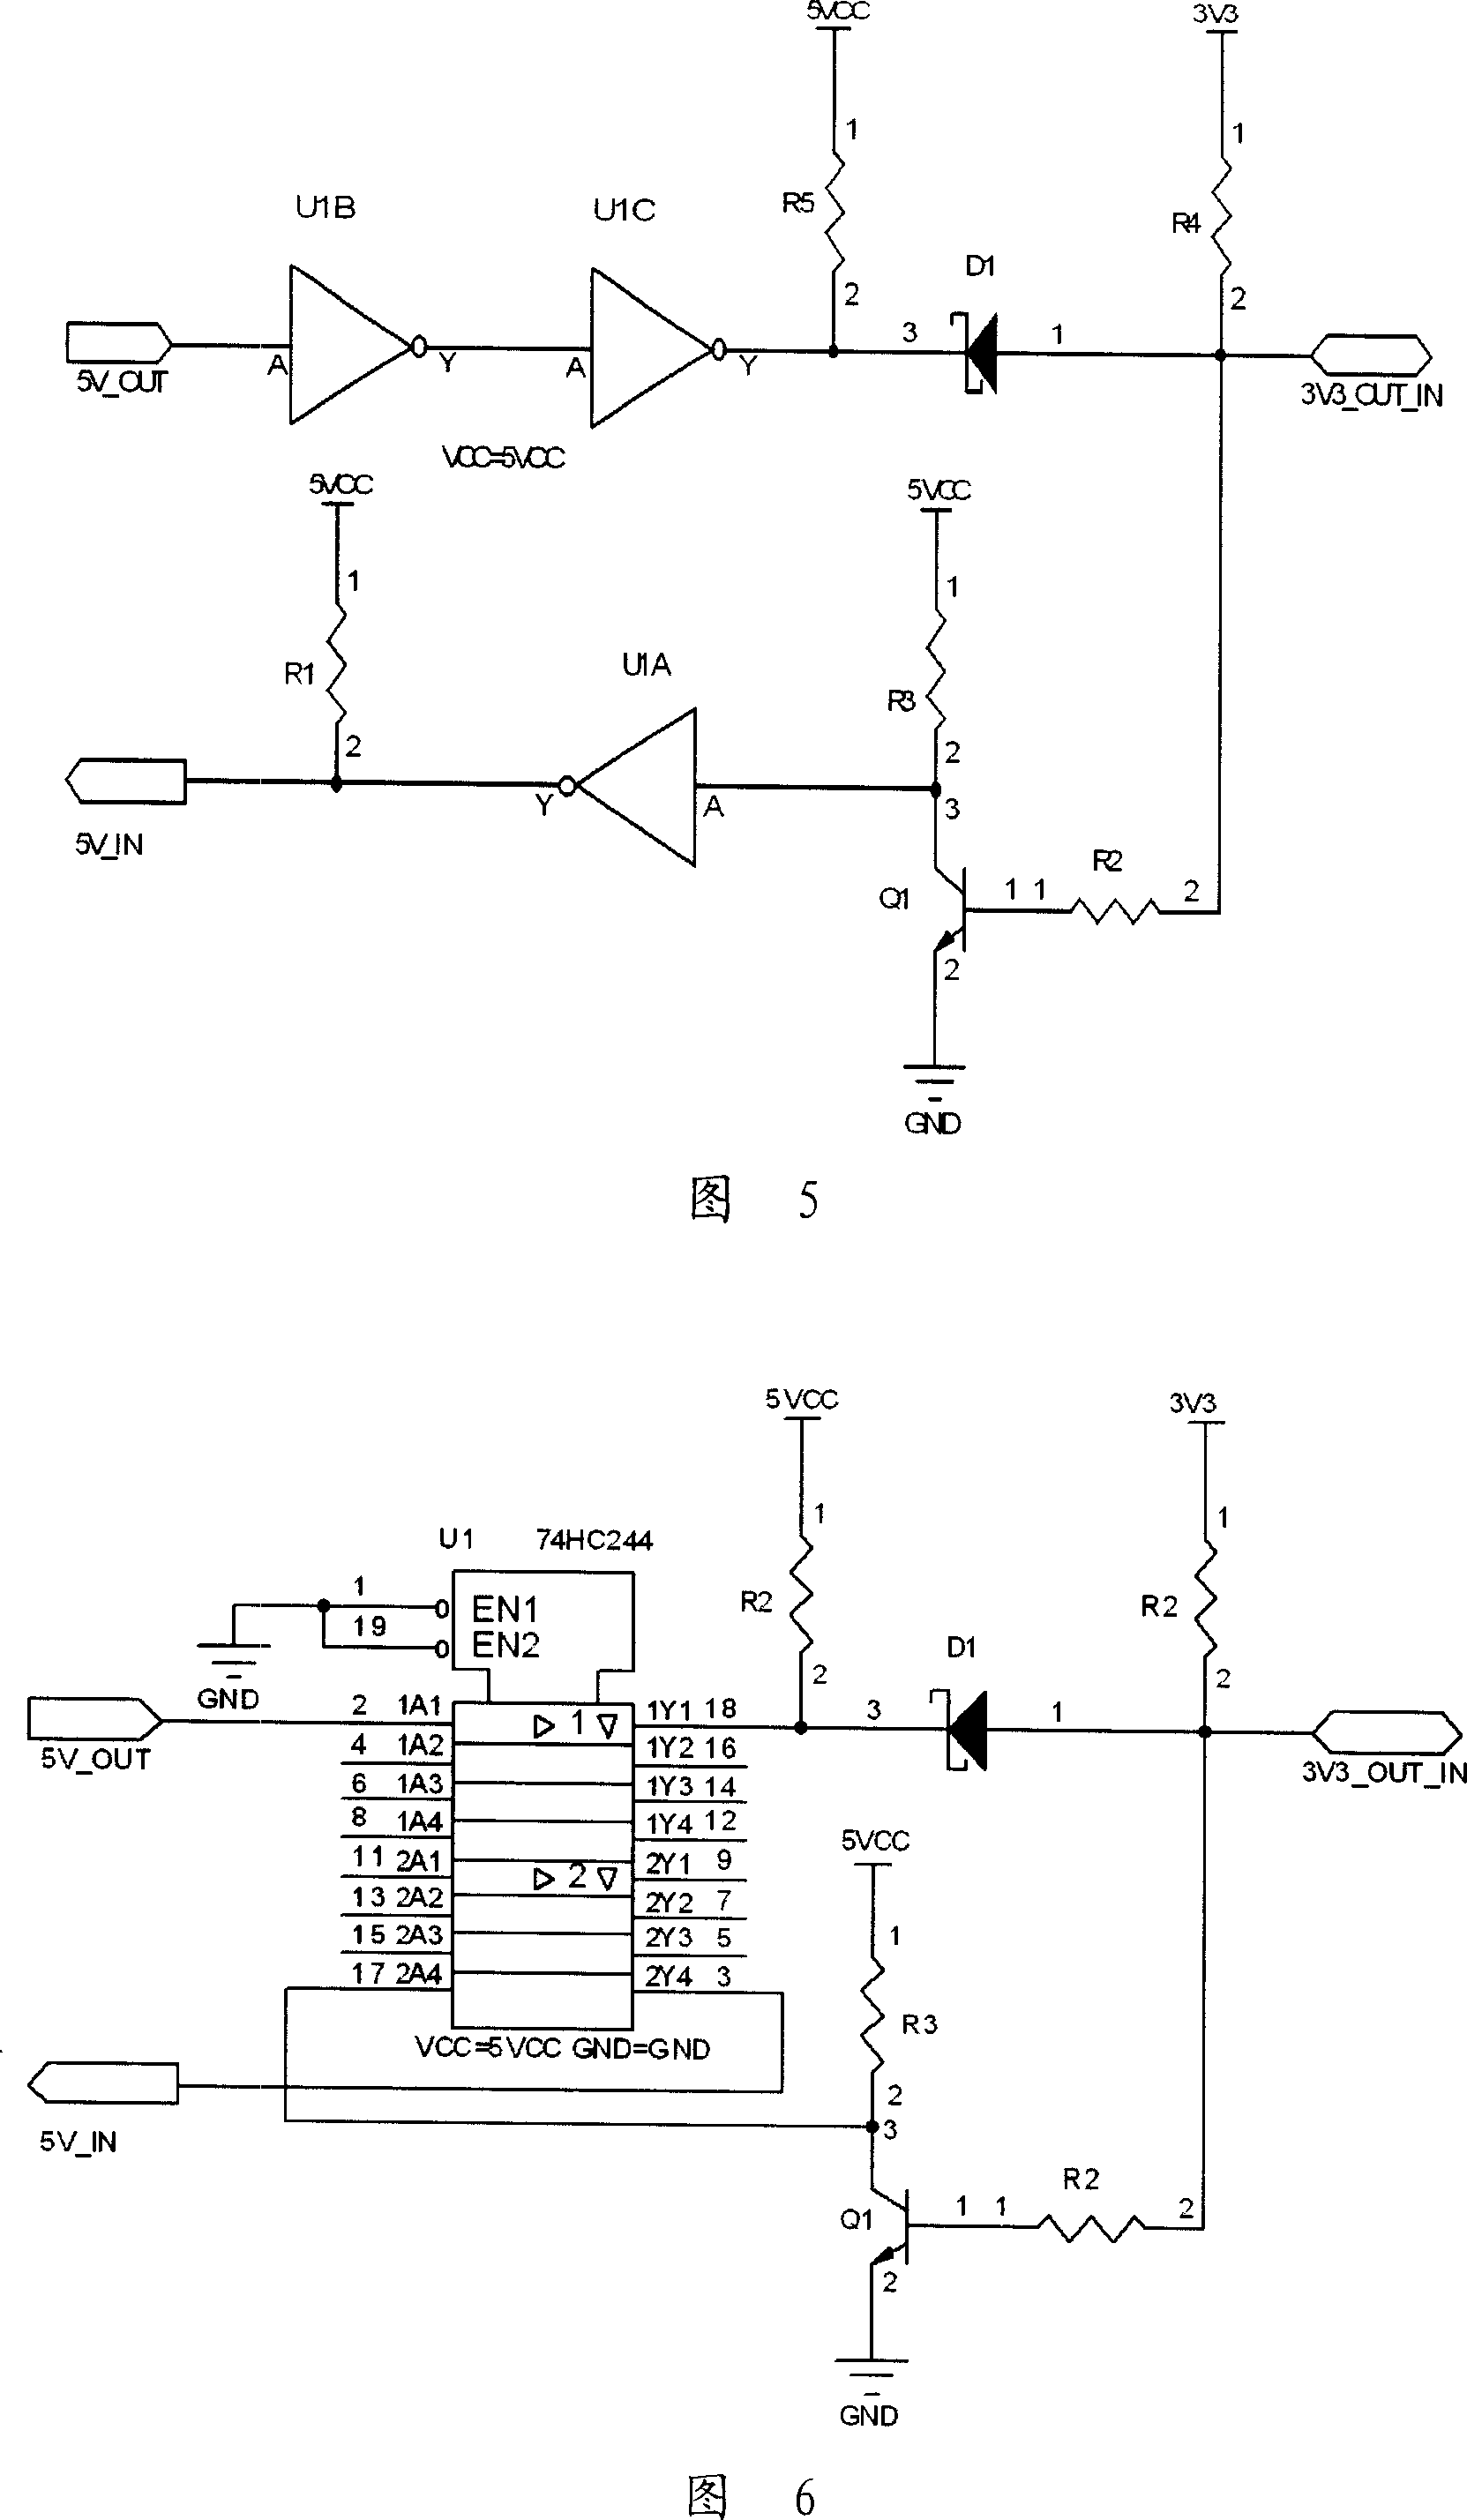 A bidirectional level conversion circuit